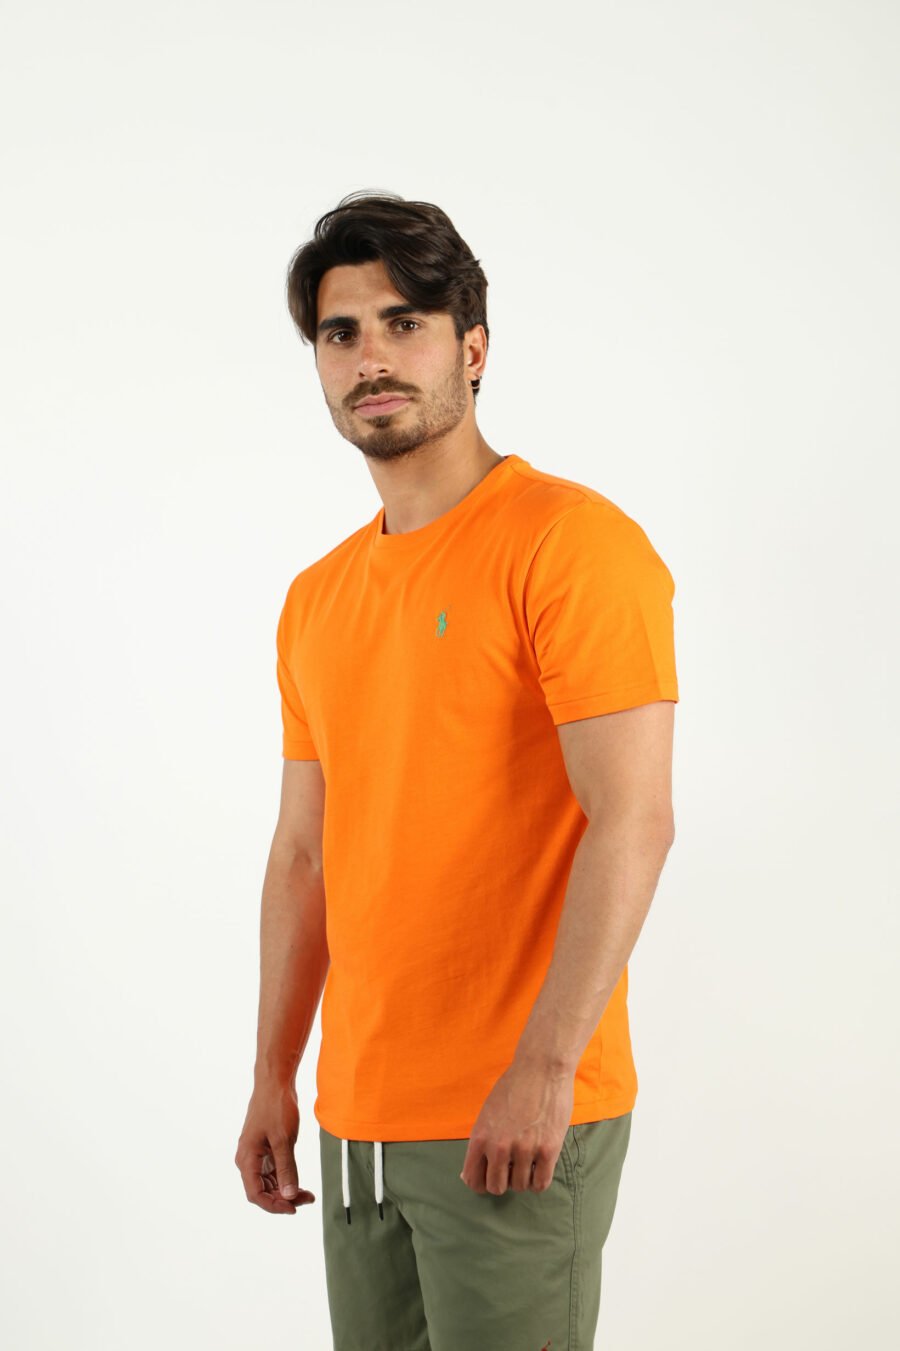 Camiseta naranja y verde con minilogo "polo" - number14001